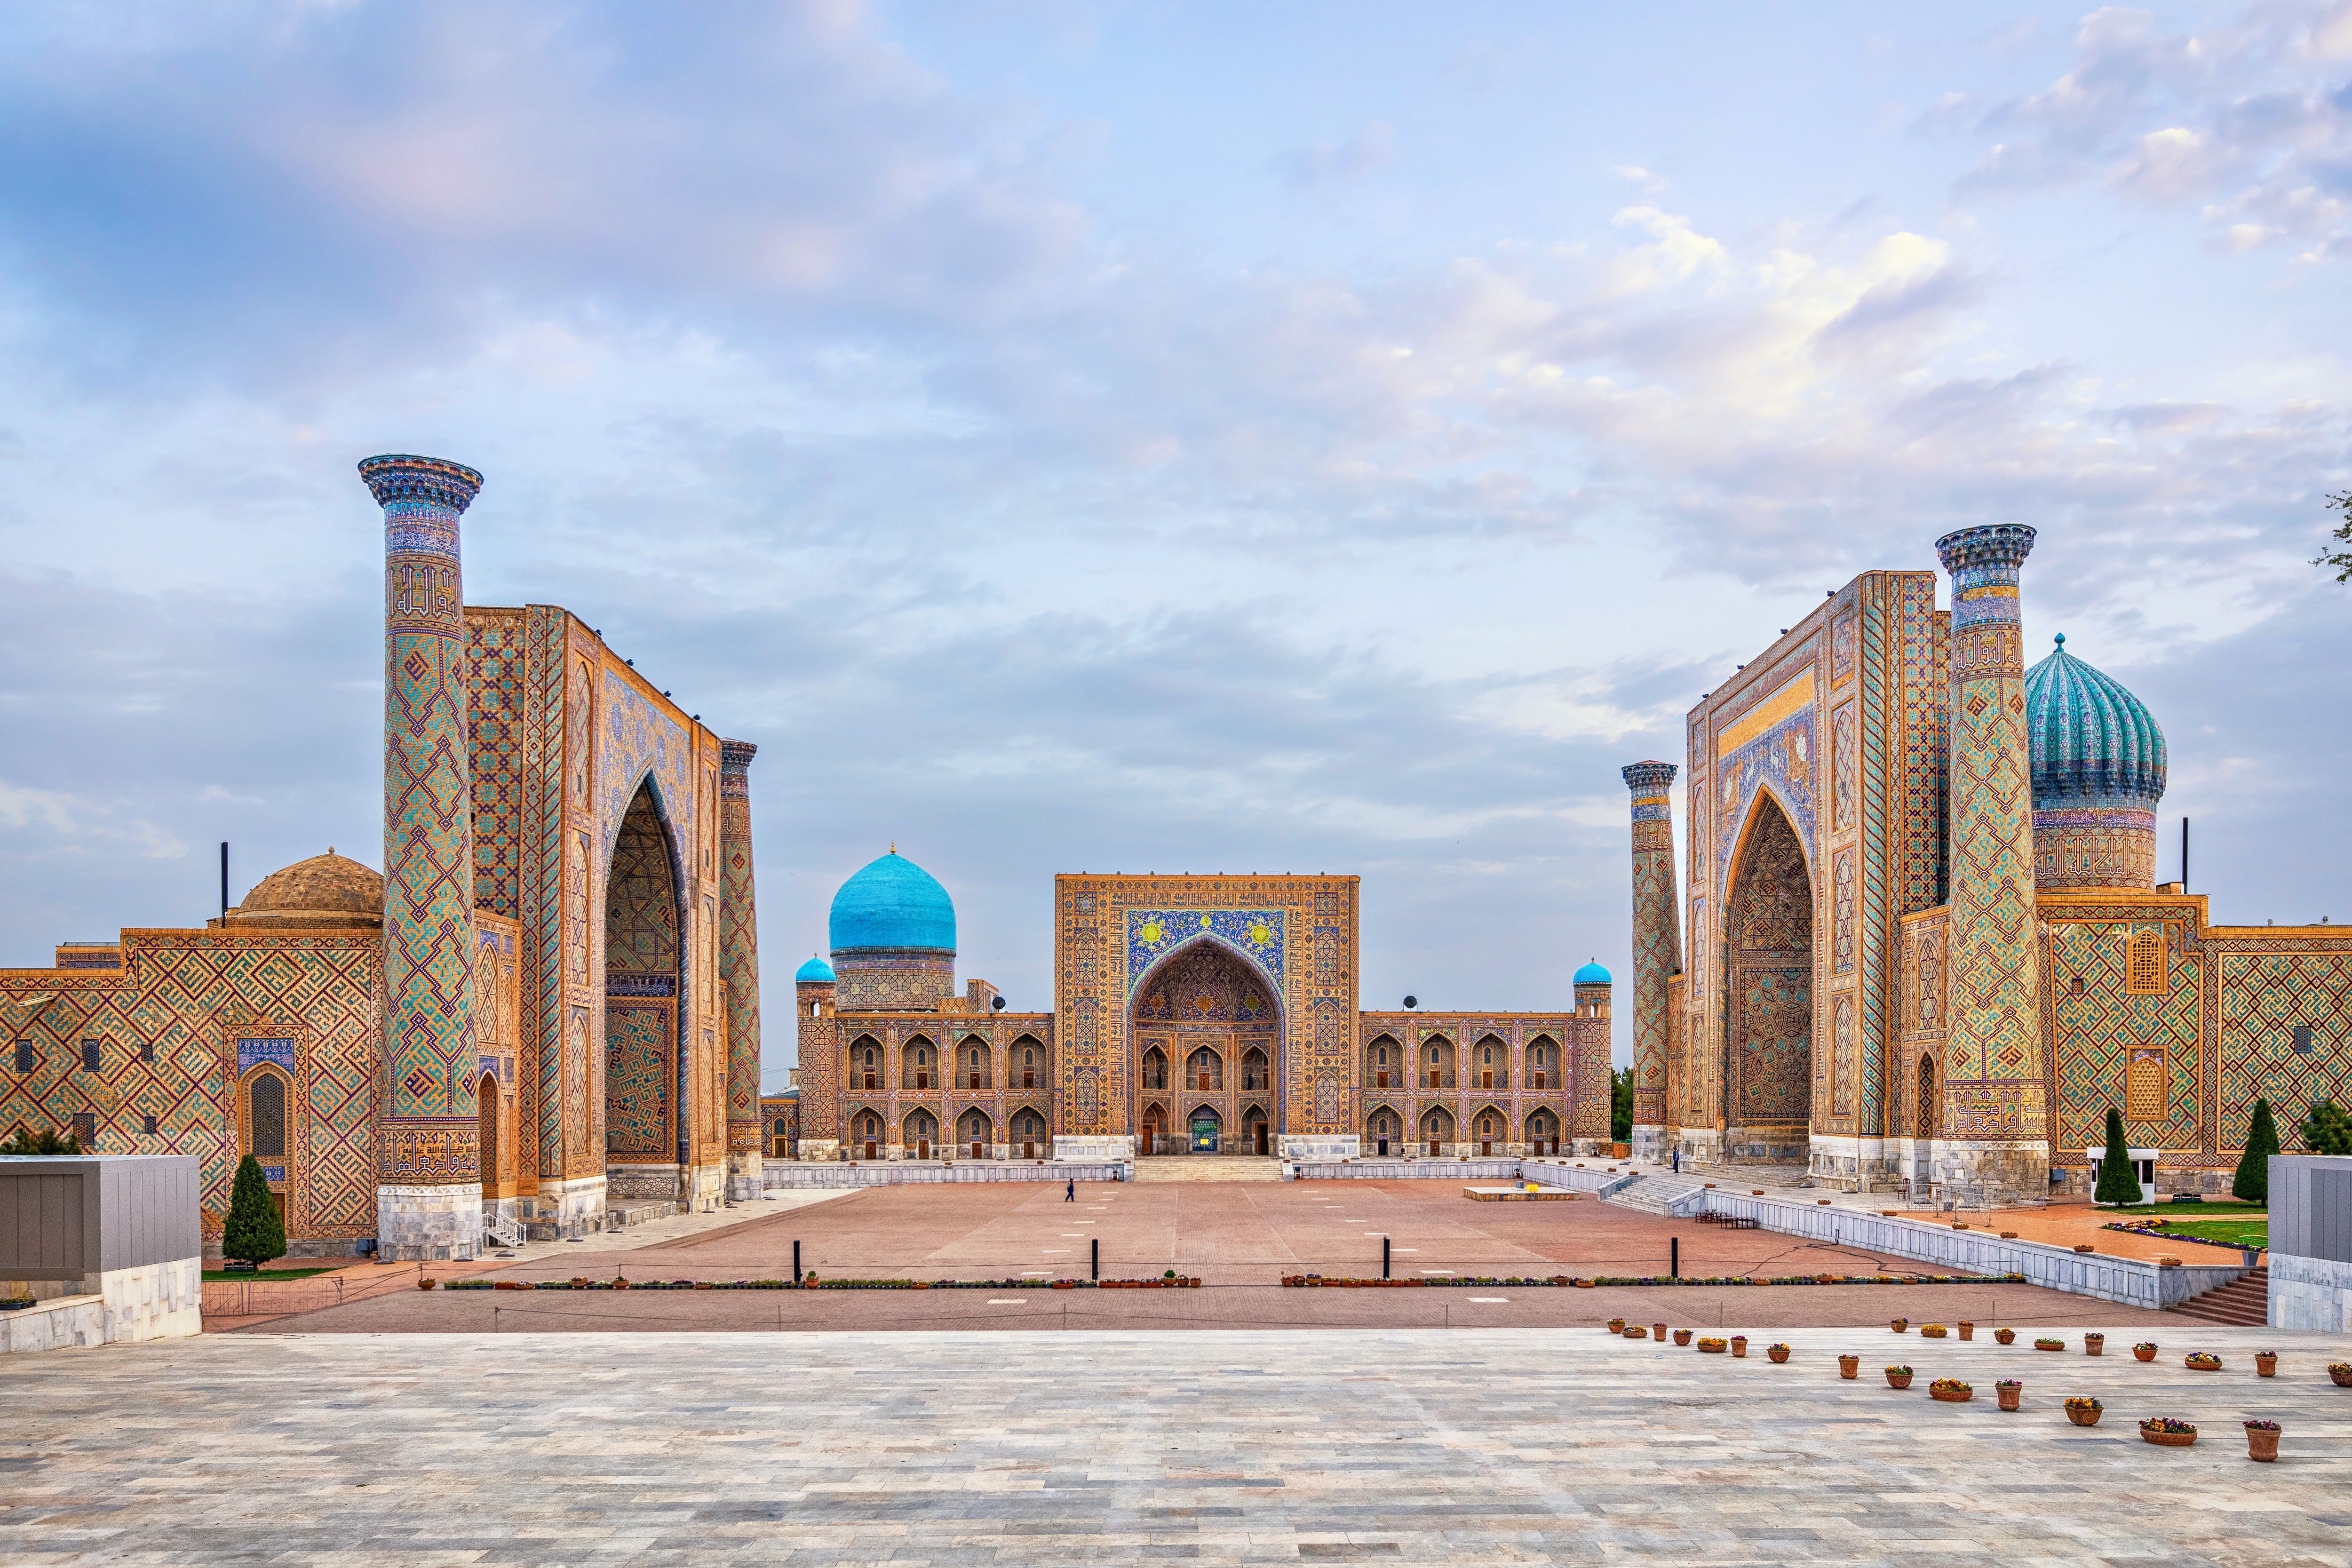 Historic Registan square with three madrasahs Ulugh Beg, Tilya-Kori and Sher-Dor, Samarkend, Uzbekistan